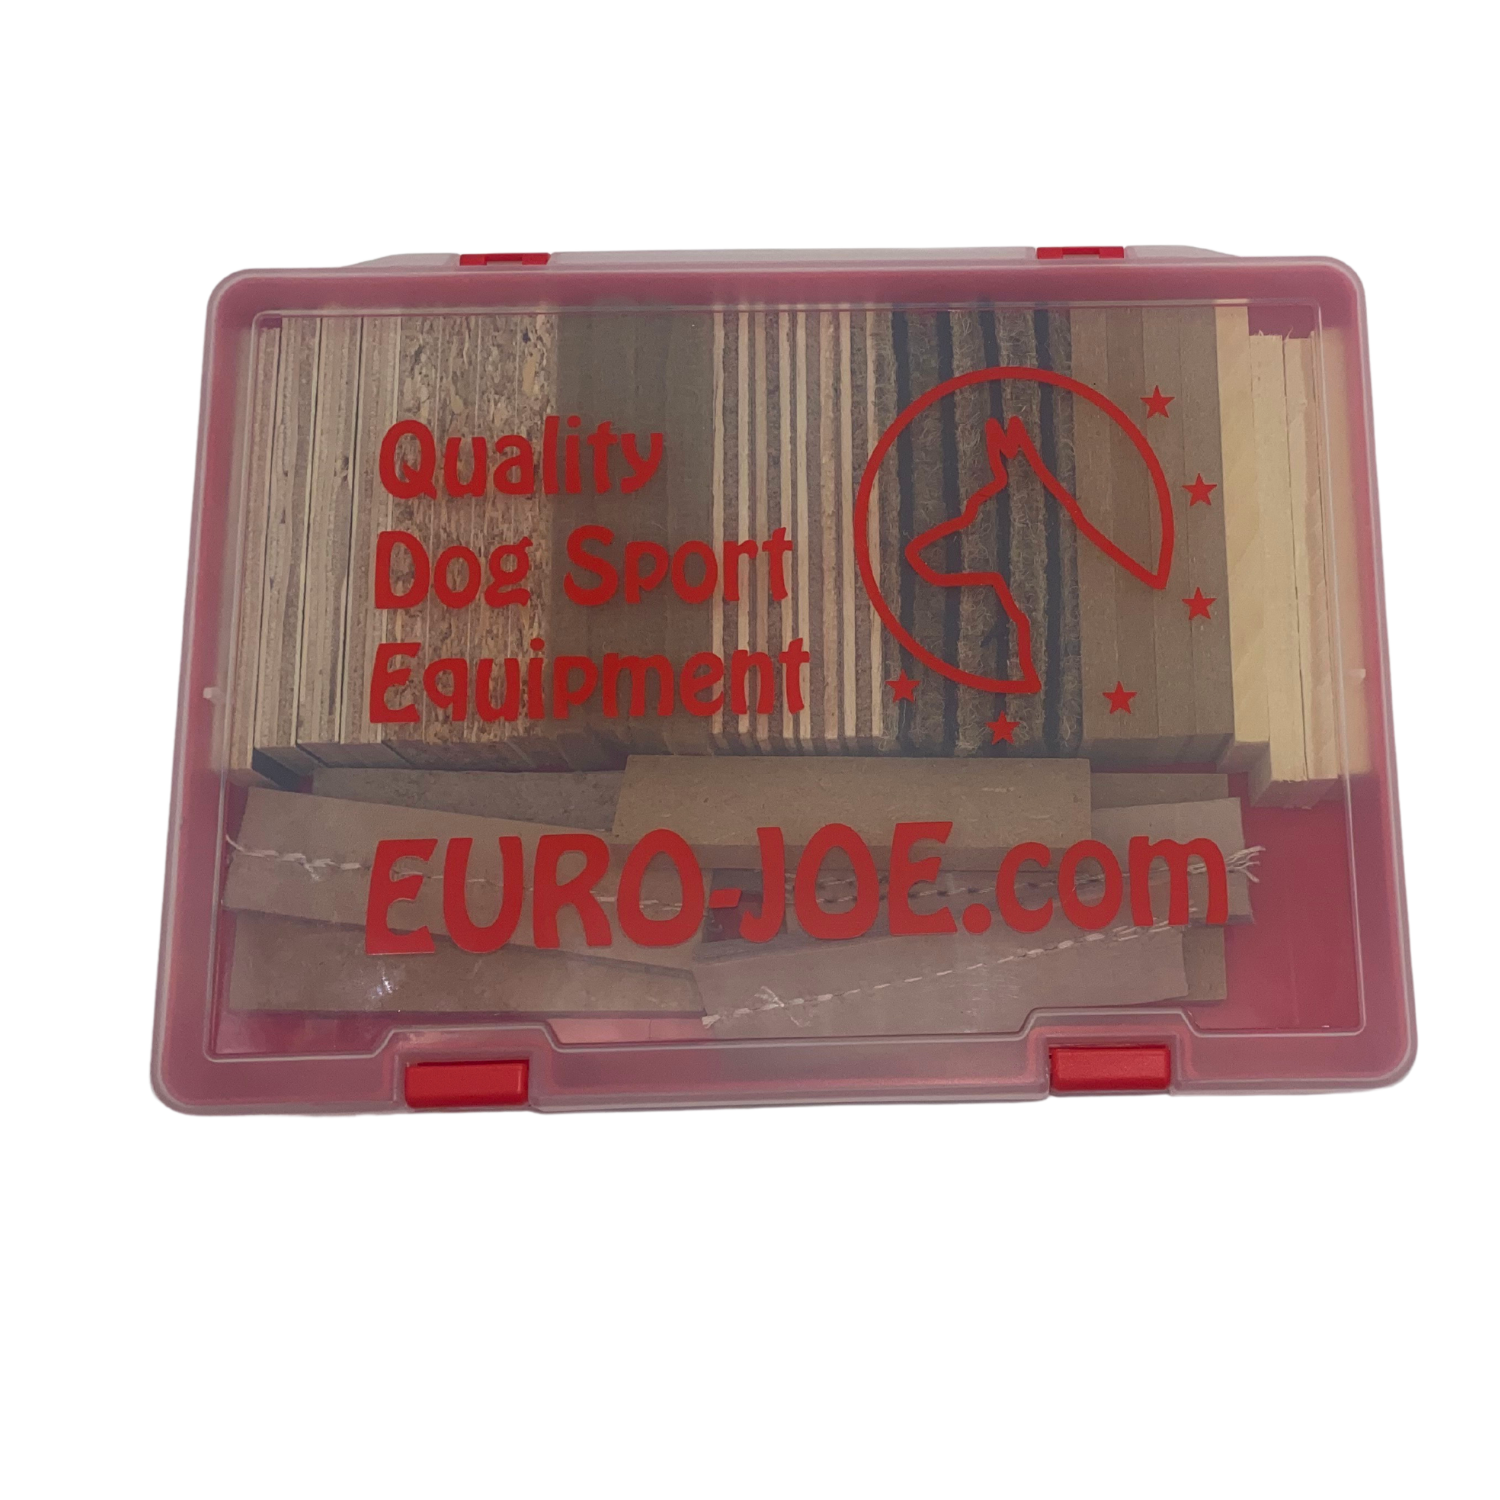 Euro Joe Tracking Box